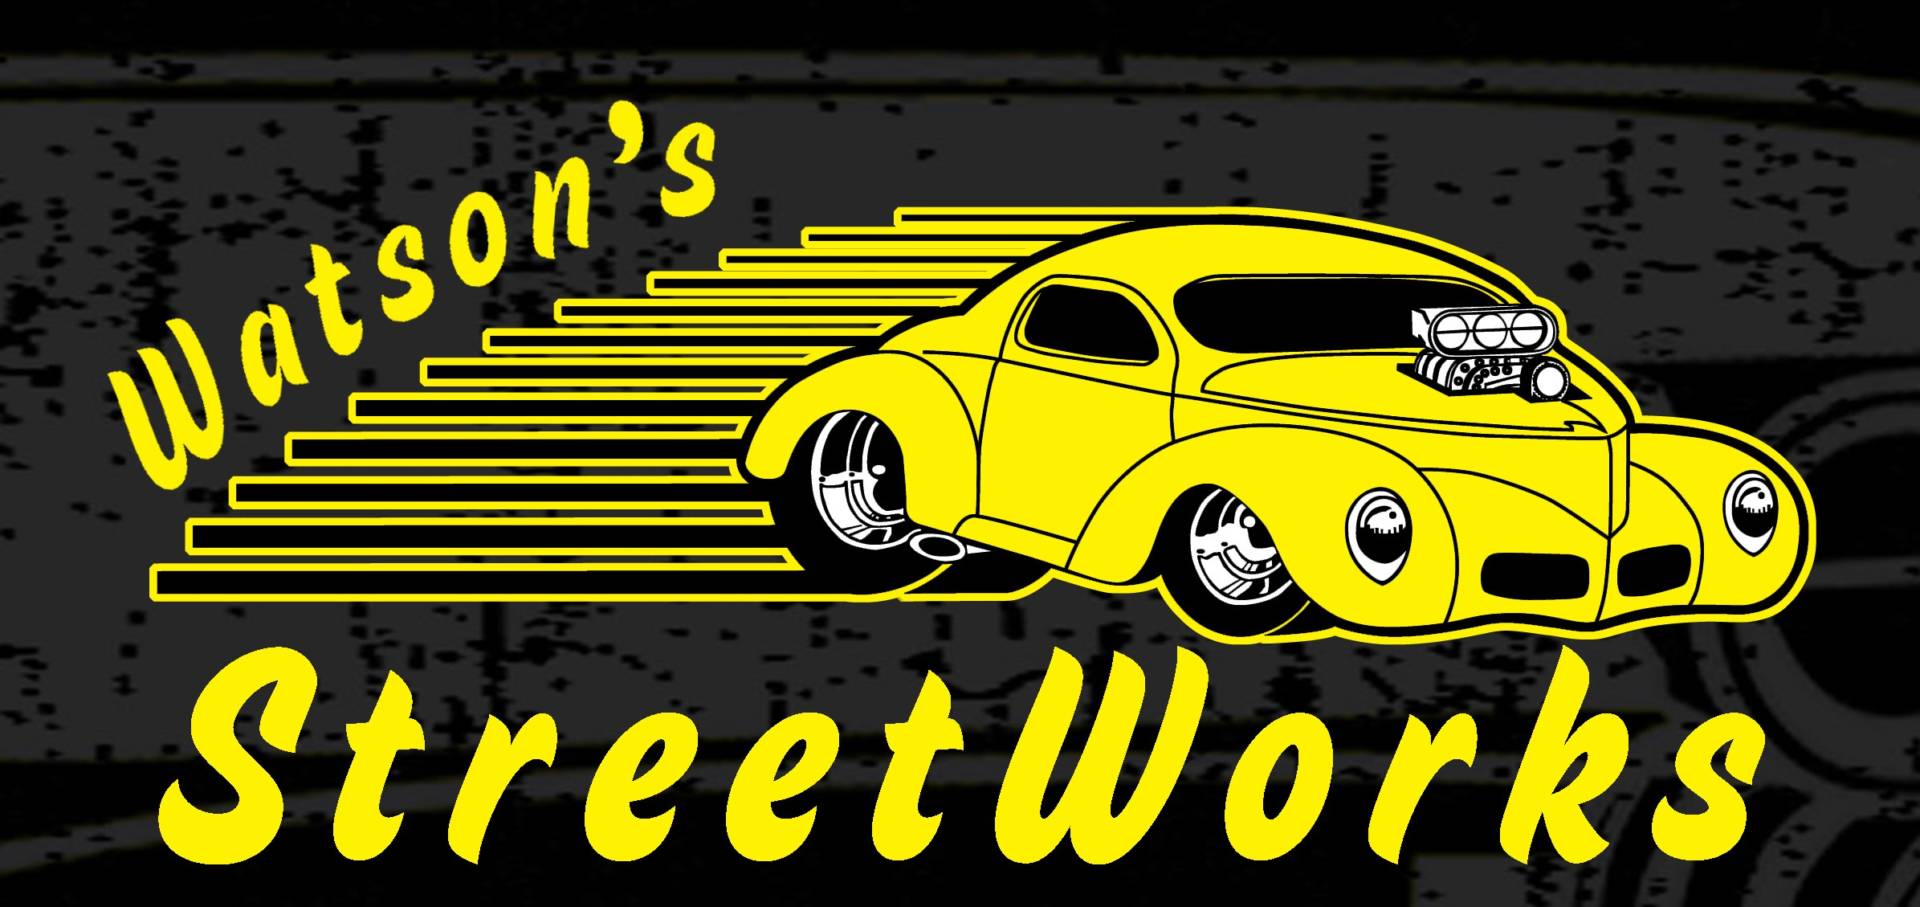 neat nob: Watson's StreetWorks